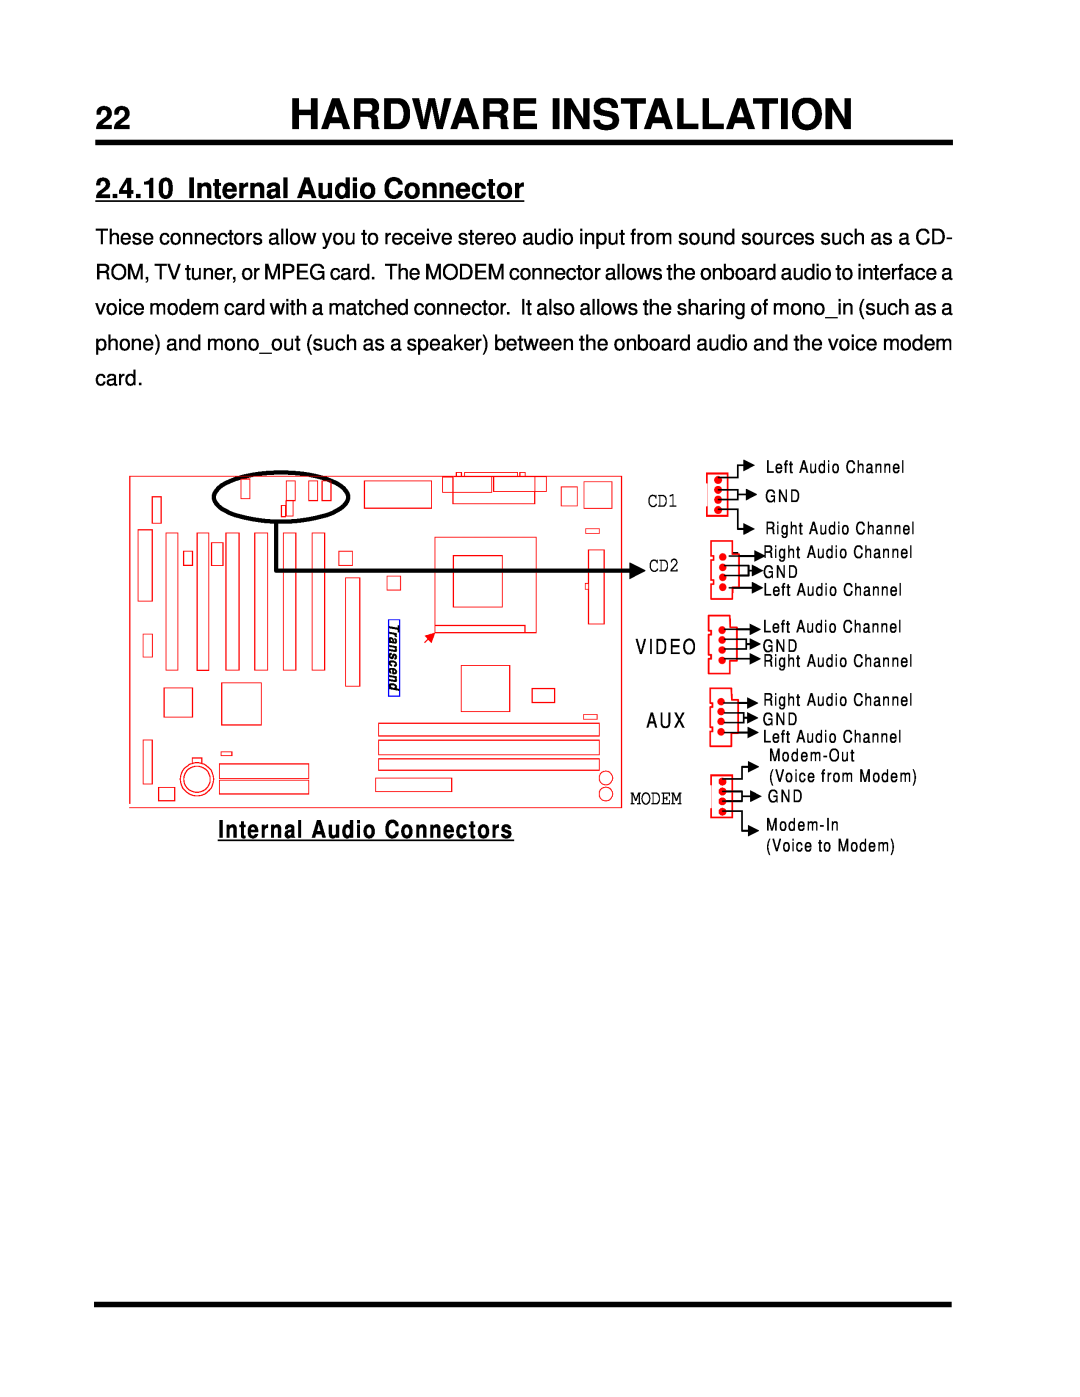 Intel TS-ASP3 user manual 22HARDWARE INSTALLATION, Internal Audio Connectors 